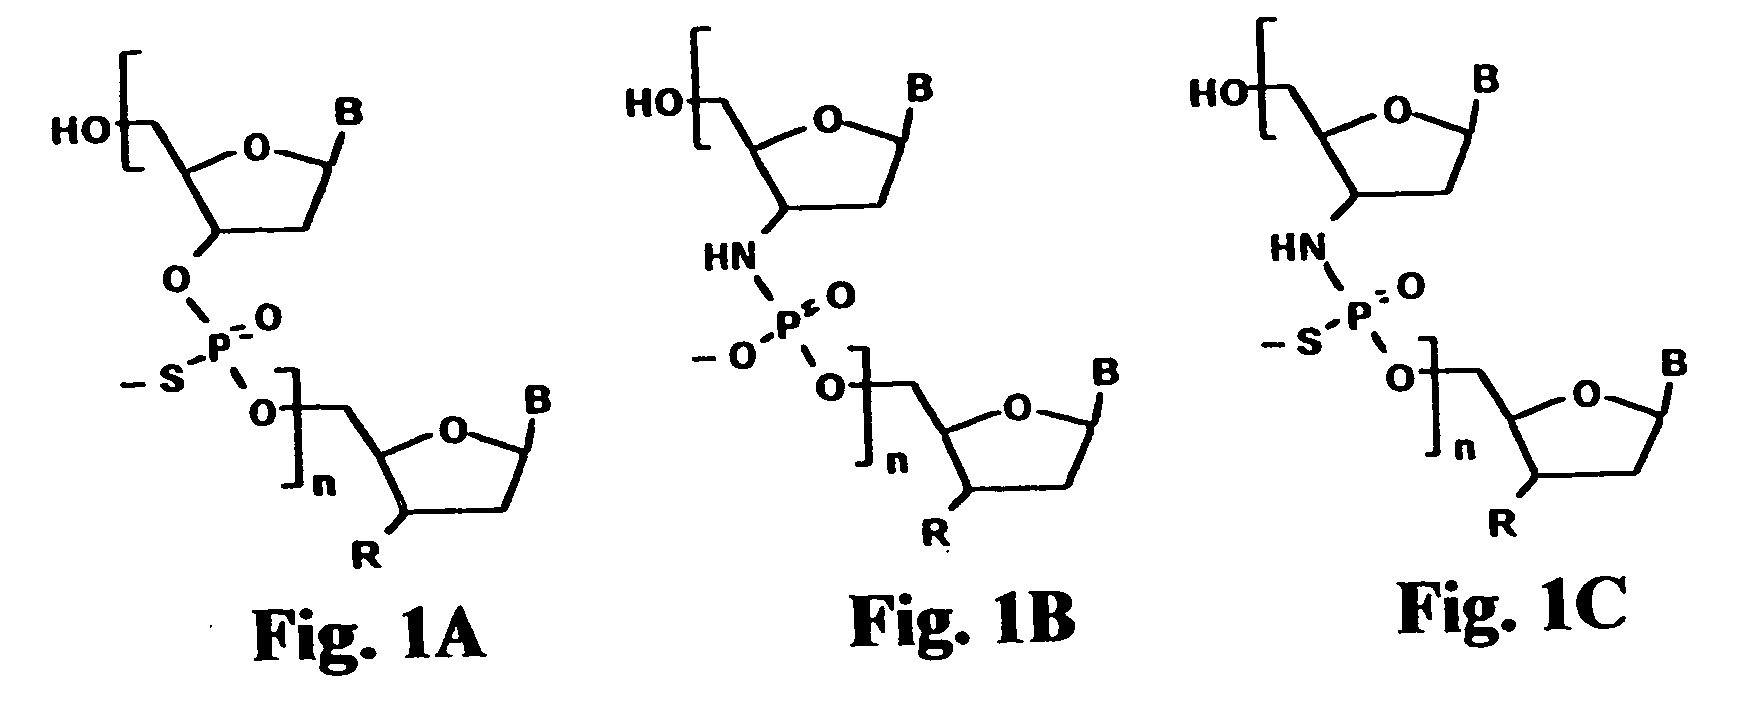 Oligonucleotide N3'-P5' thiophosphoramidates: their synthesis and use